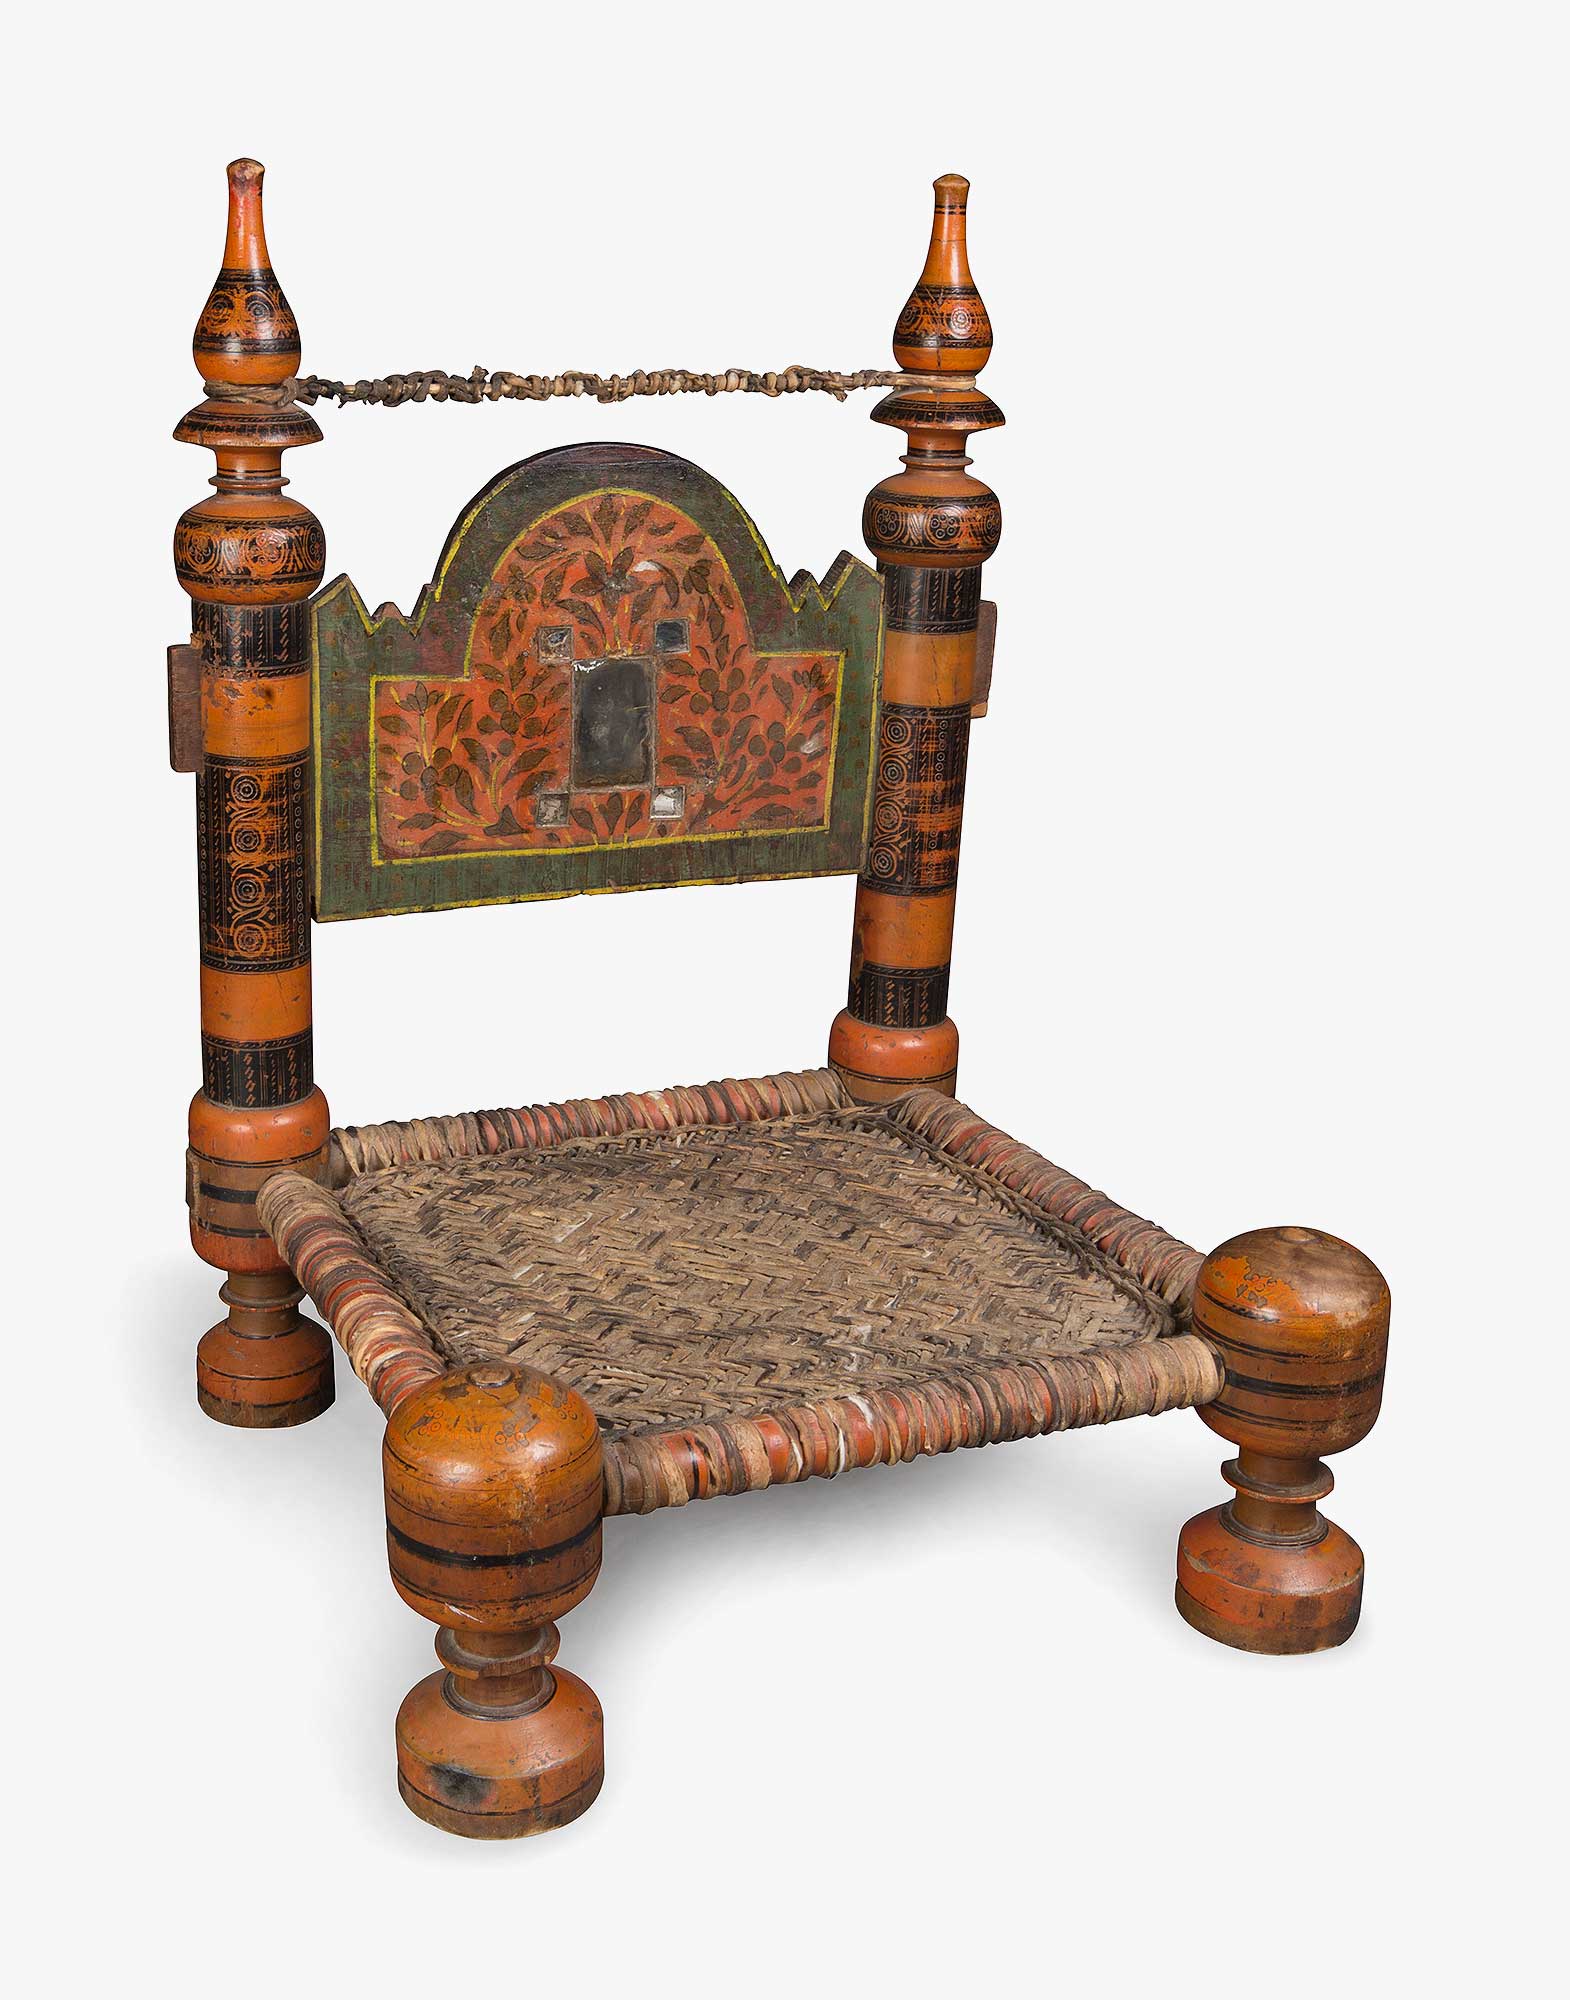 Uzbek Painted Wooden Wicker Chair